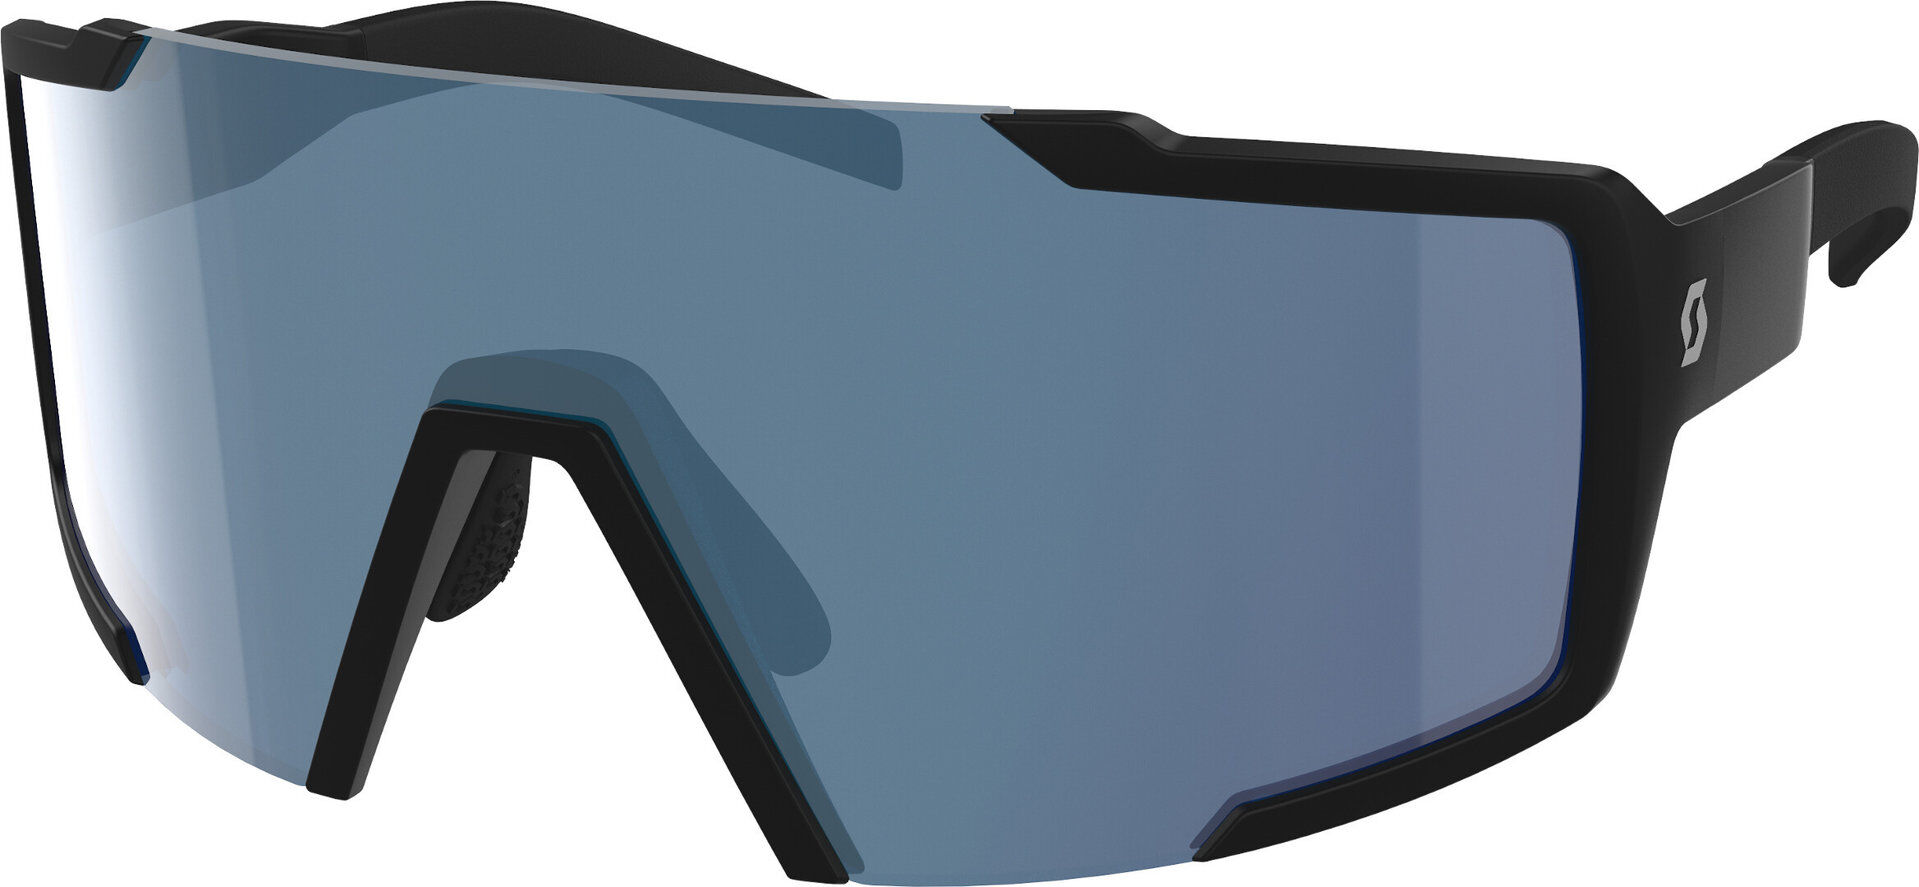 Scott Shield Gafas de sol - Negro (un tamaño)